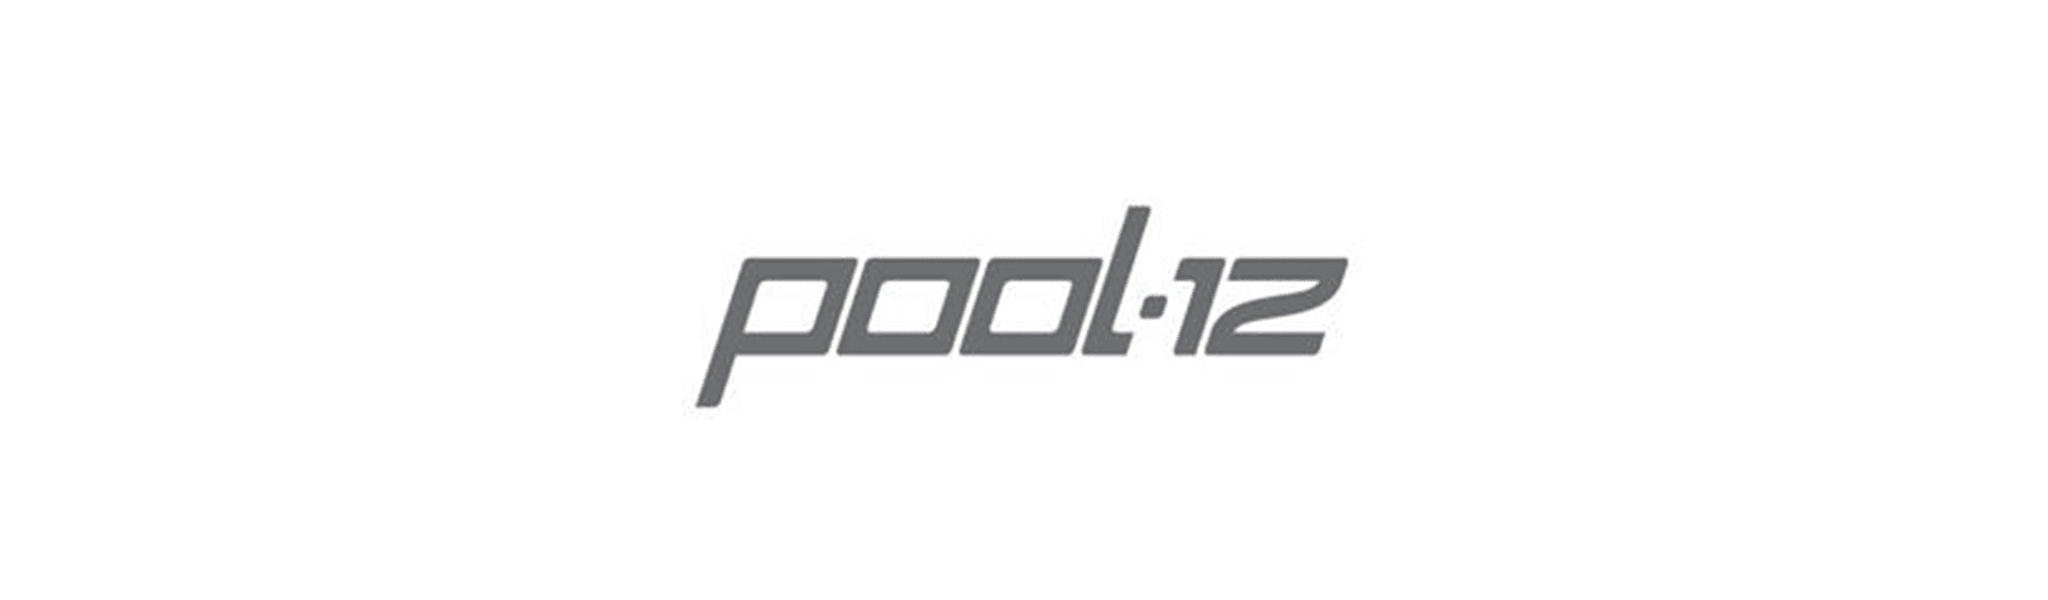 Pool 12 Accelerator - Fly reel